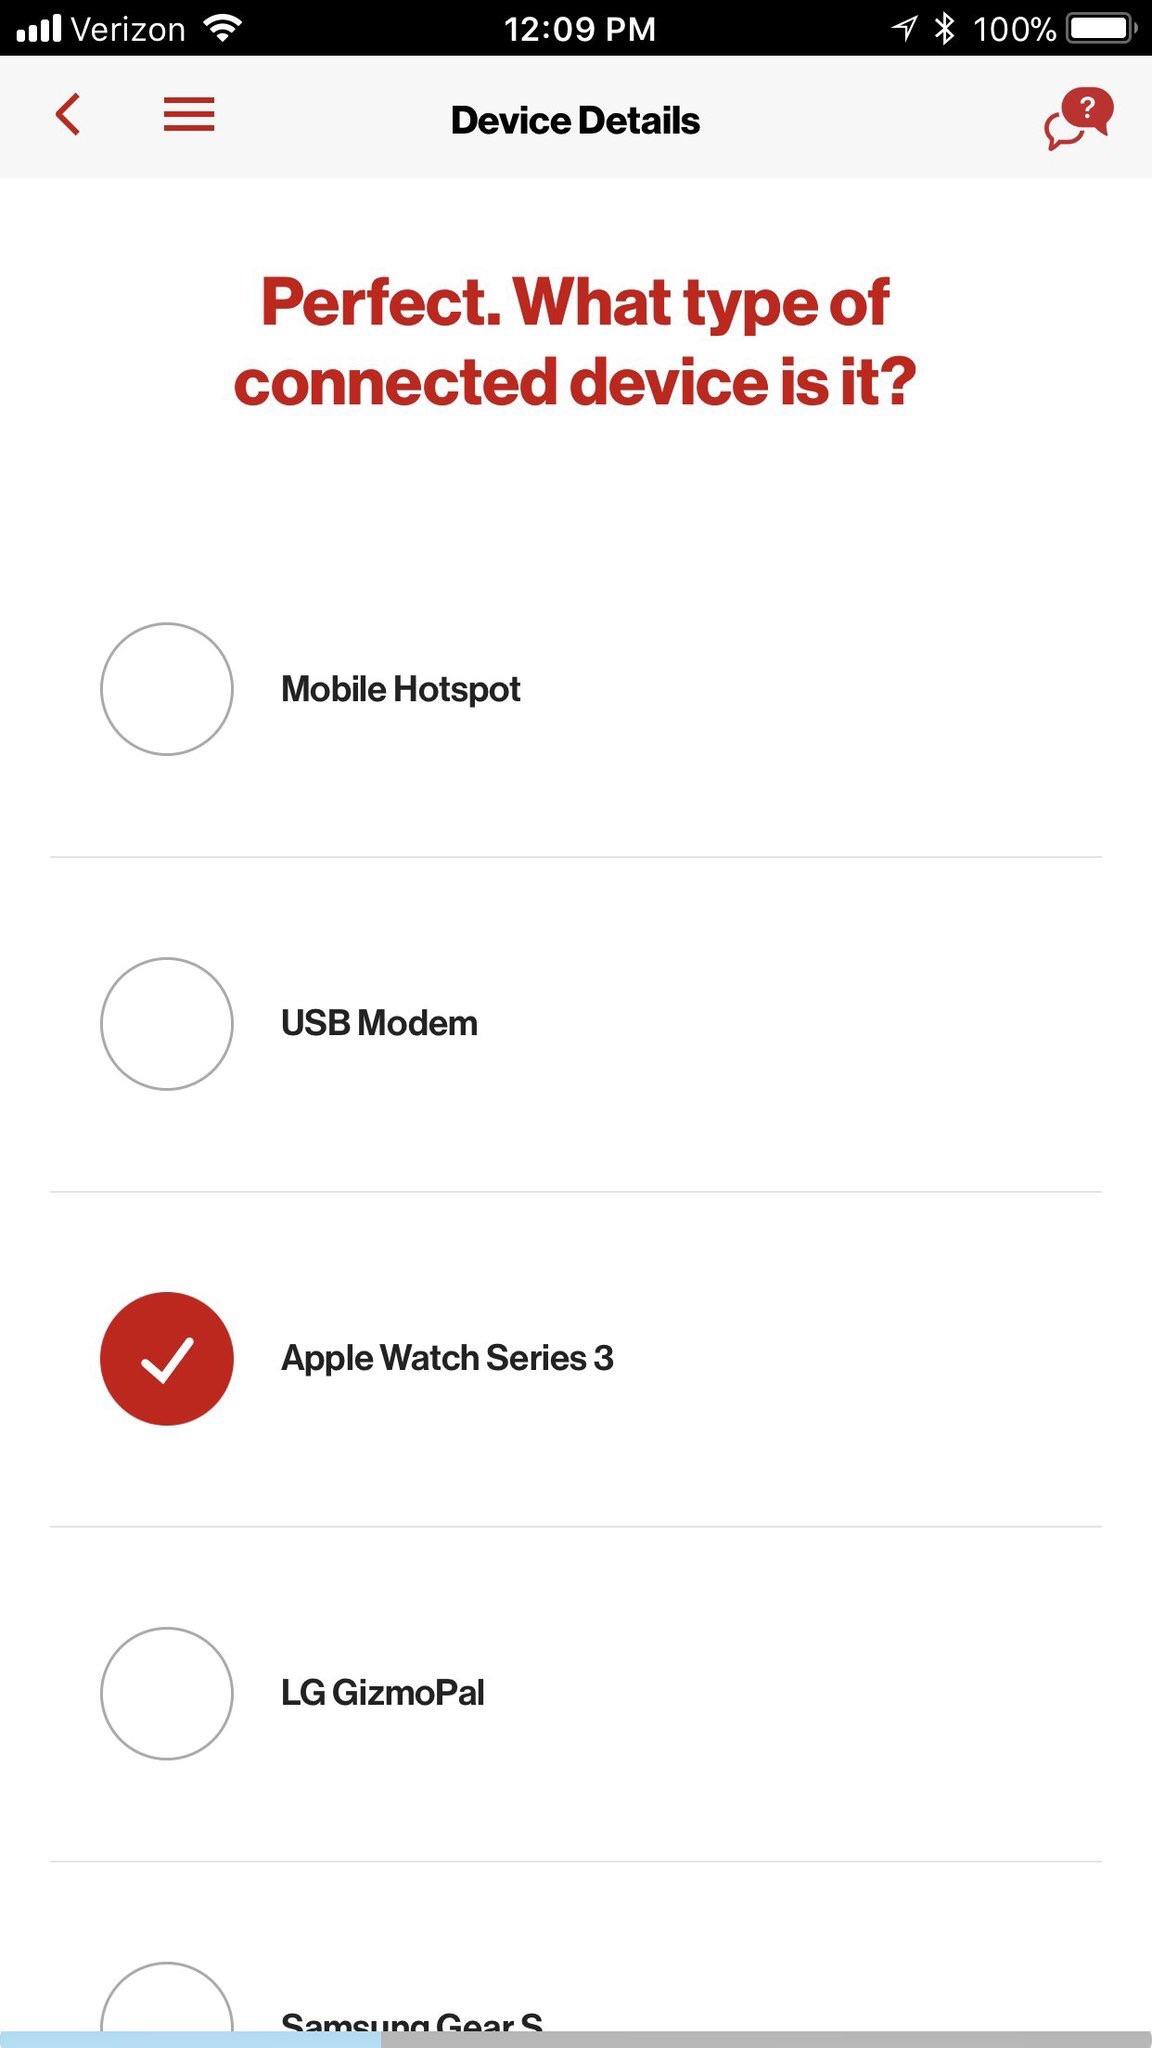 apple-watch-series-3-verizon.jpg?quality